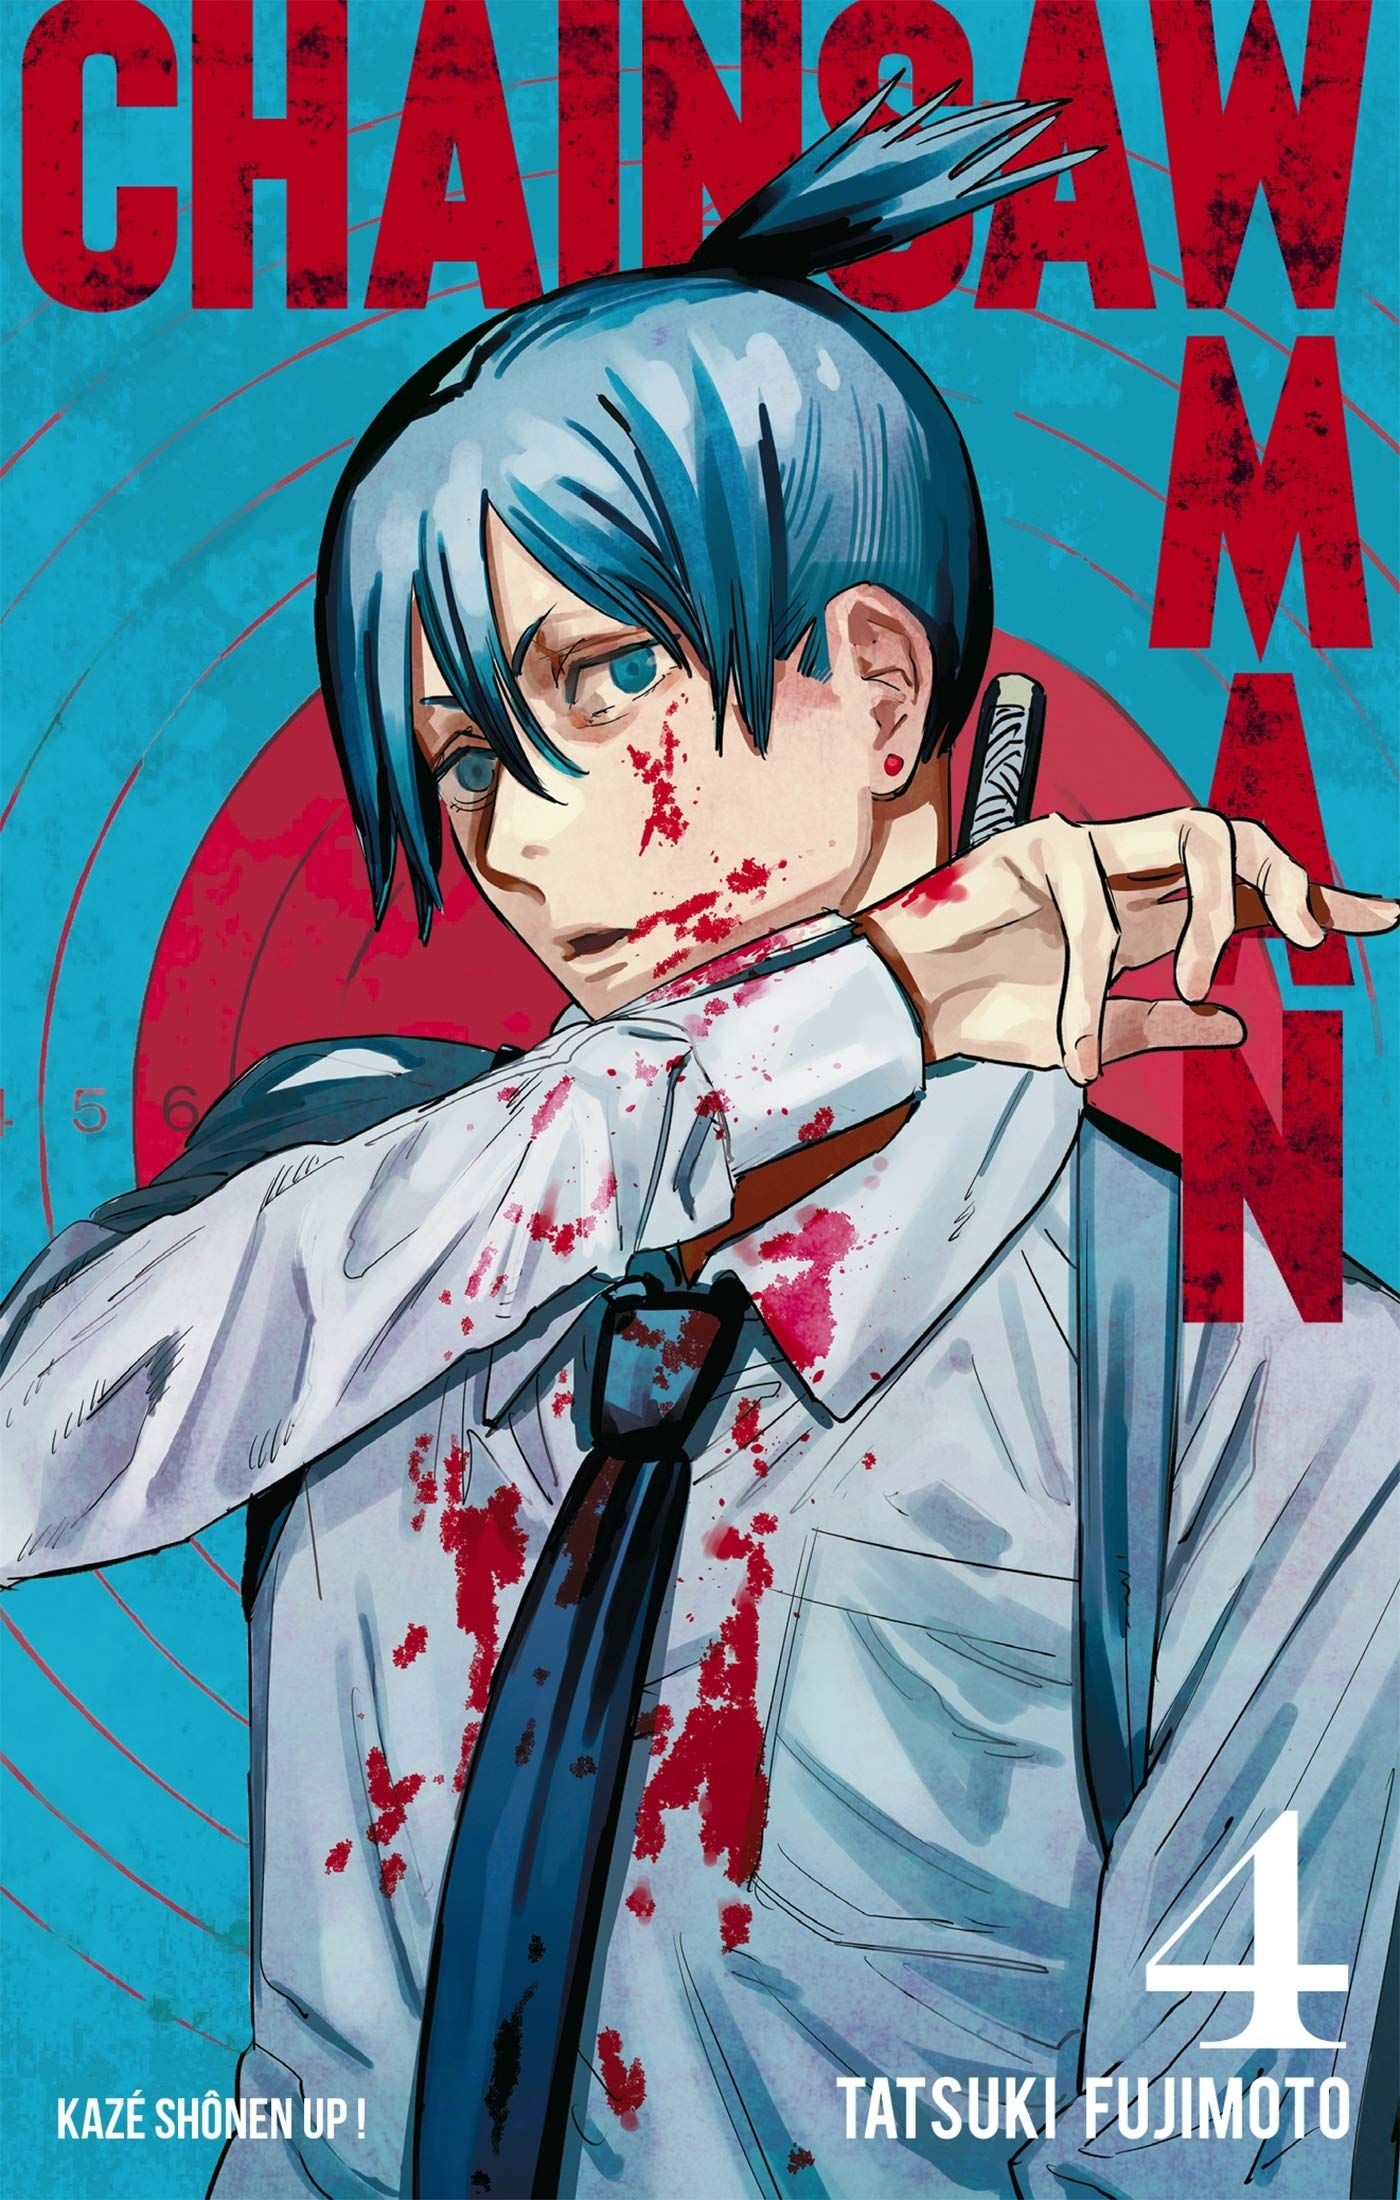 Vol.4 Chainsaw Man - Manga - Manga news